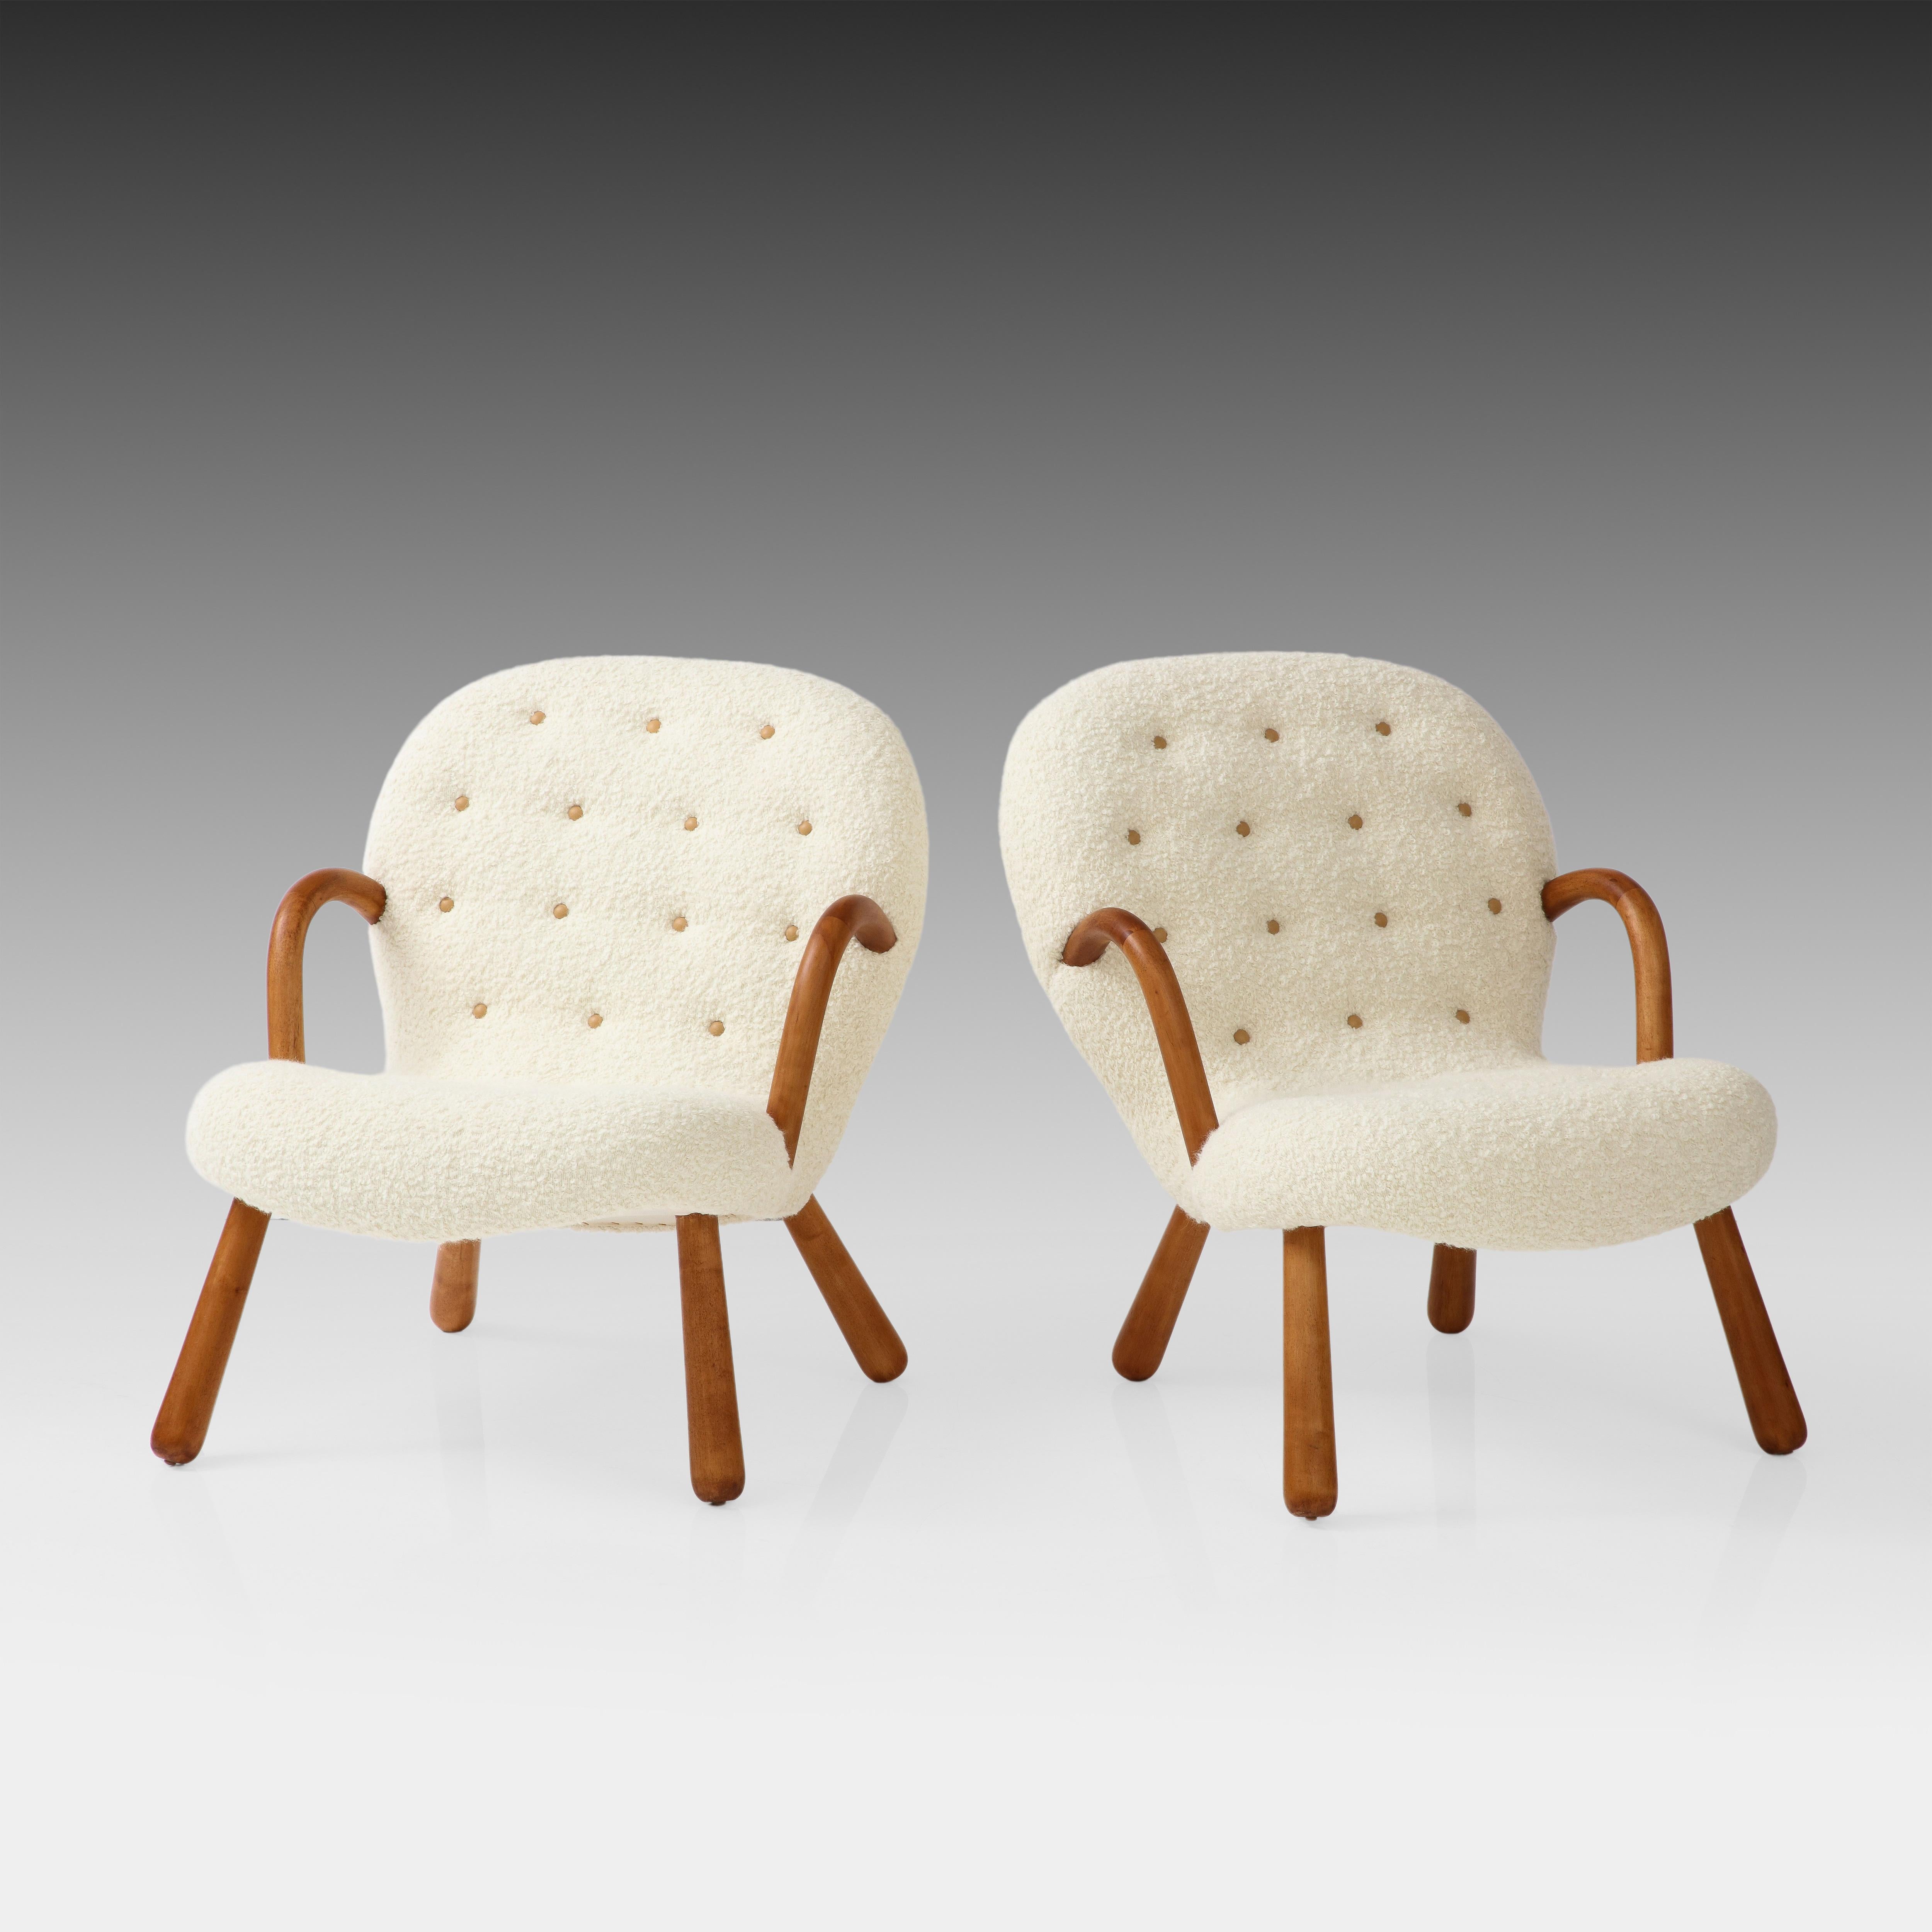 Scandinavian Modern Arnold Madsen for Madsen & Schubell Rare Pair of Clam Chairs, Denmark, 1944 For Sale